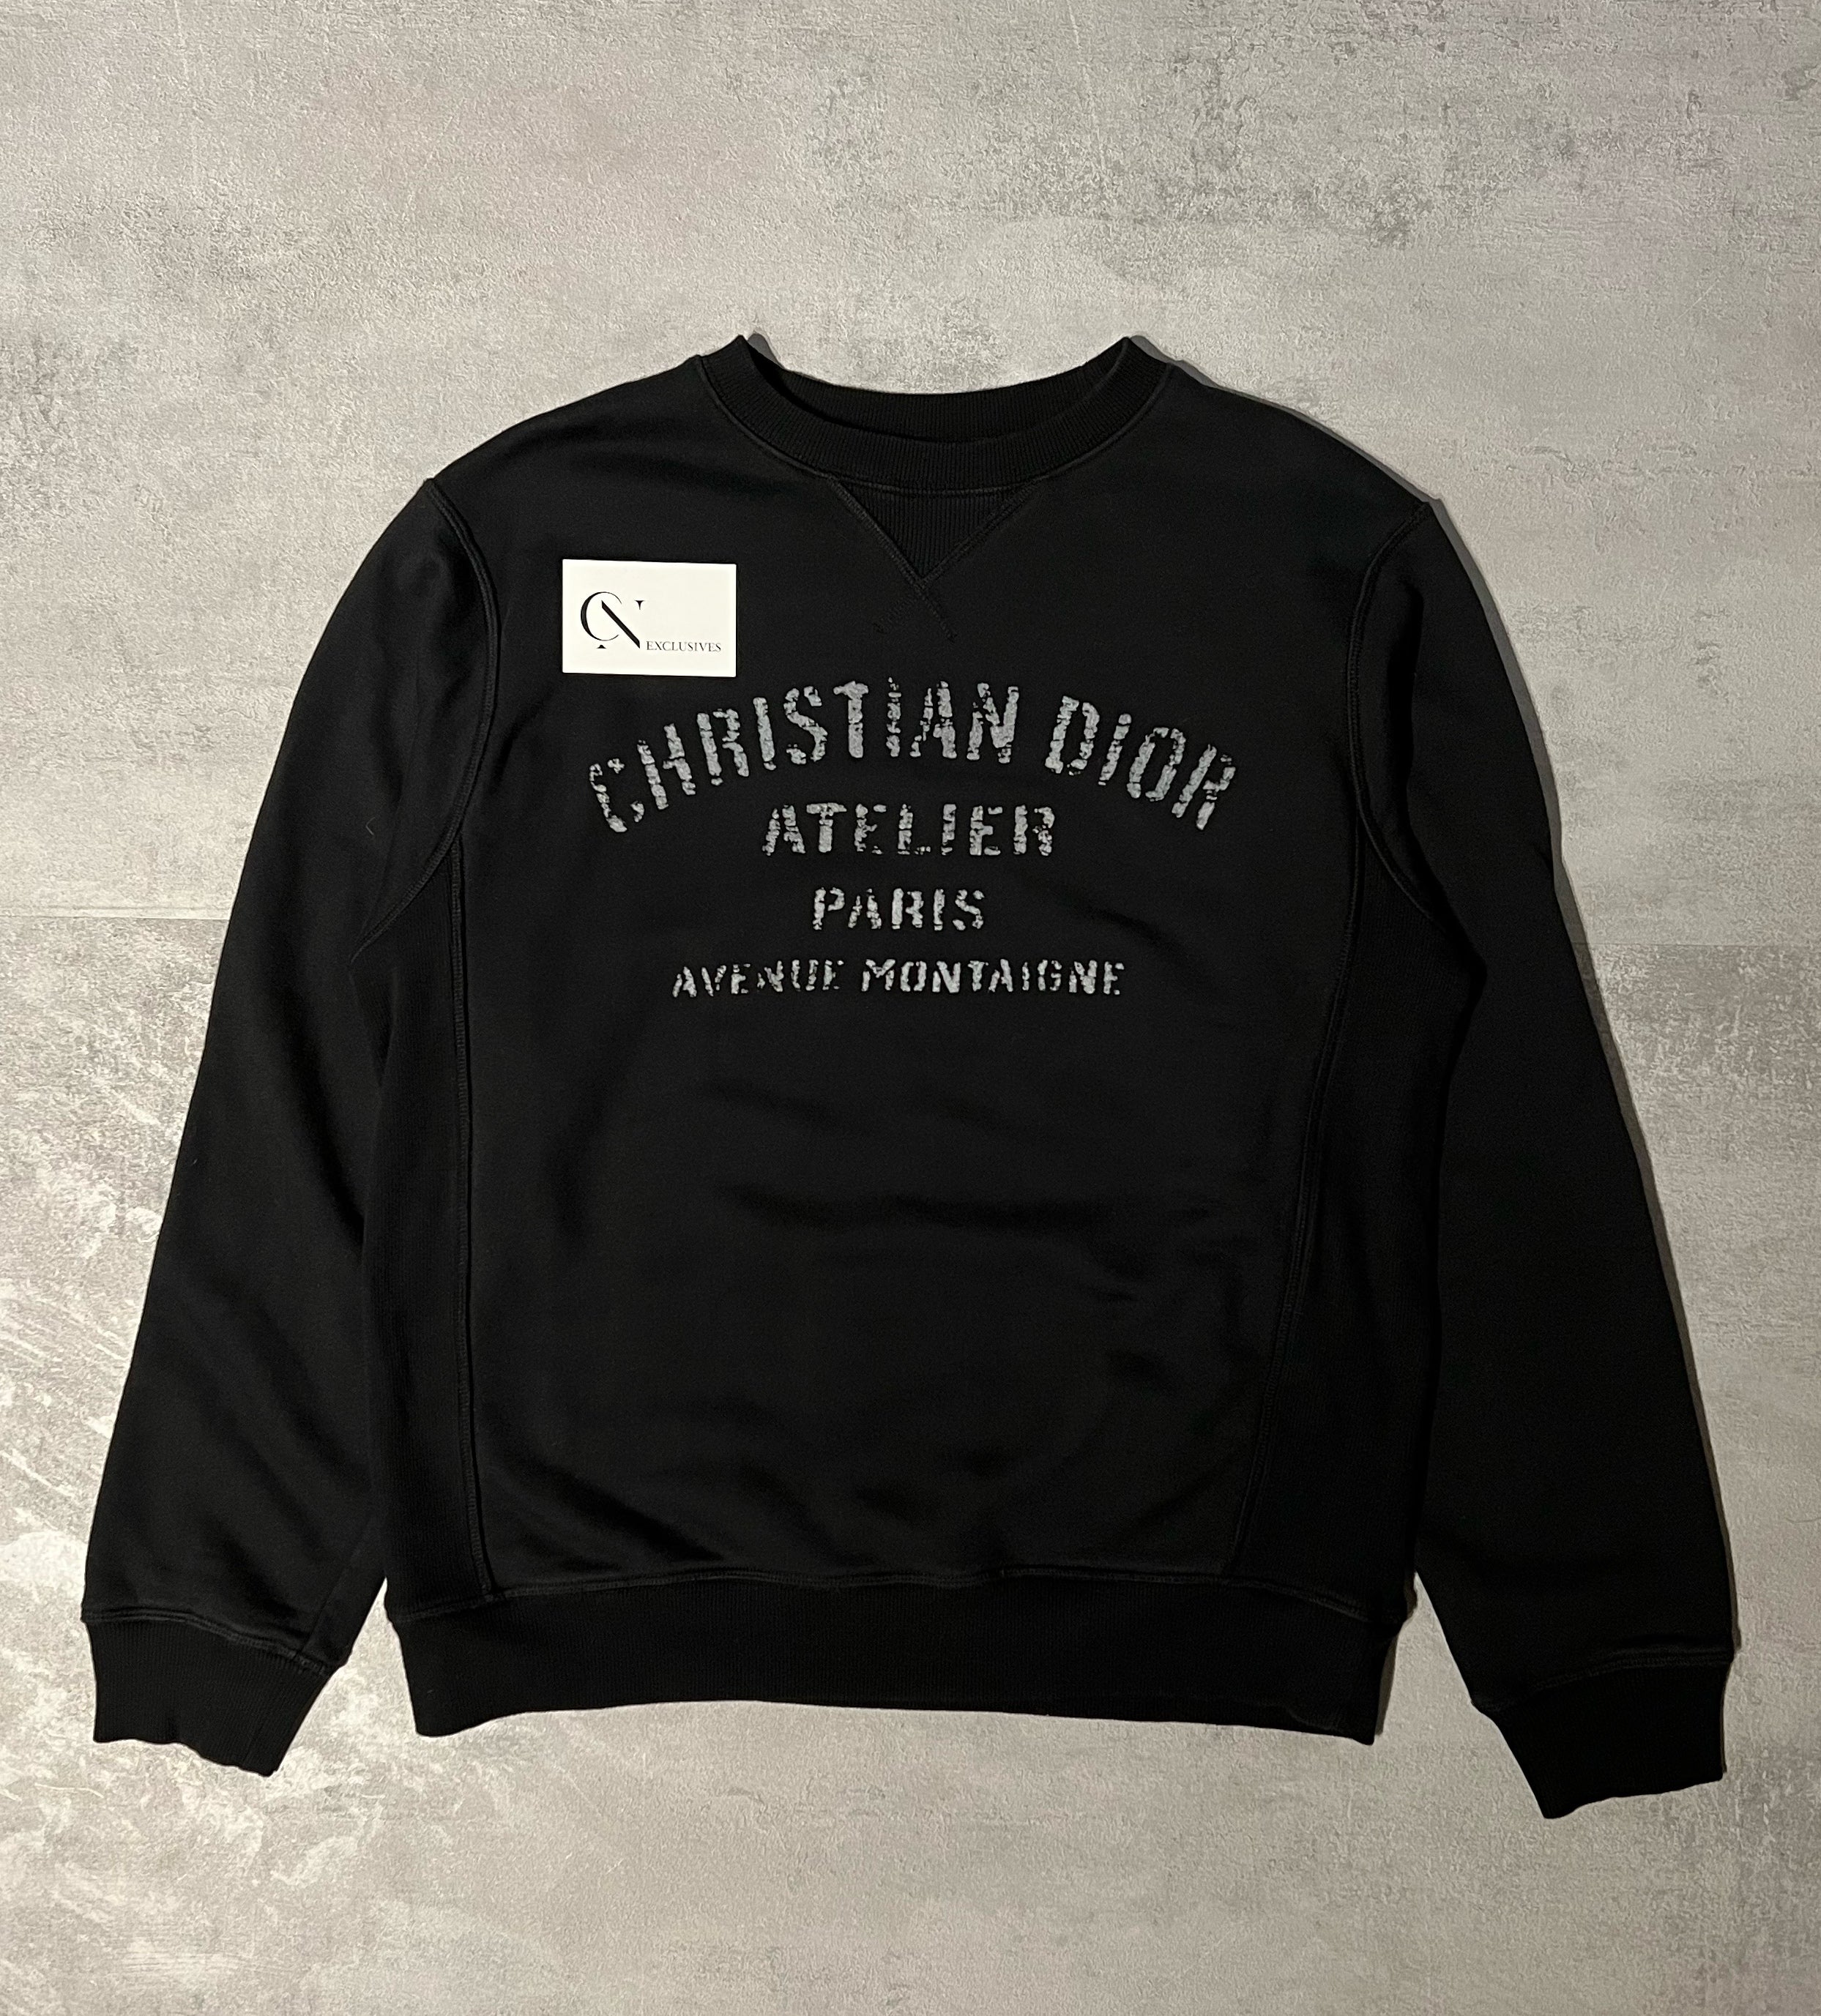 Christian Dior Atelier Sweater